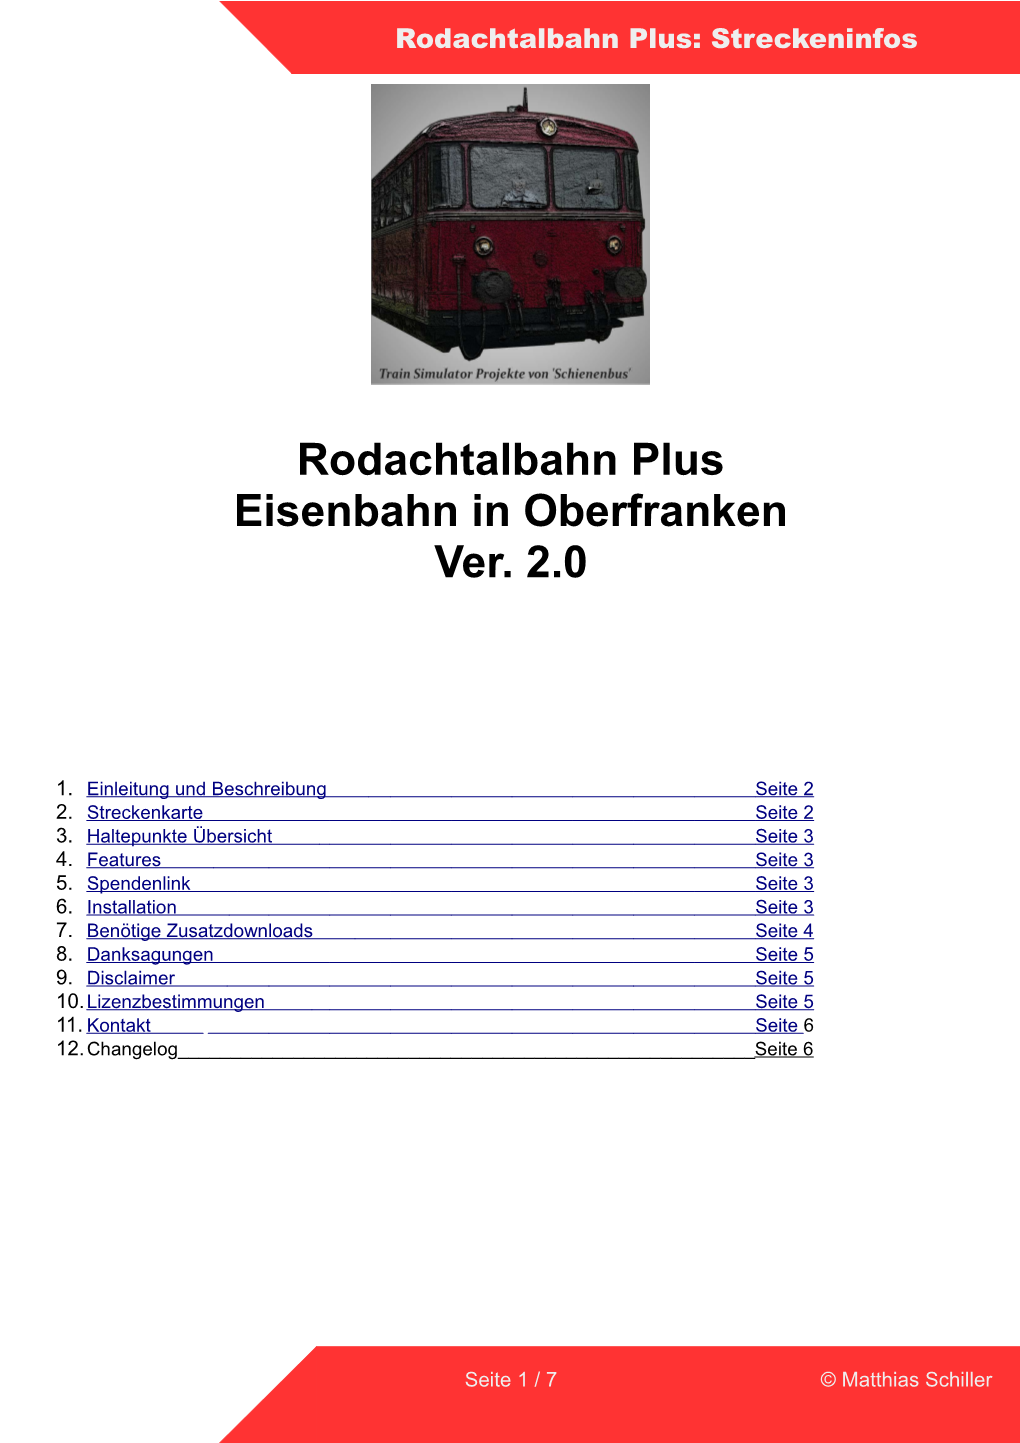 Rodachtalbahn Plus Eisenbahn in Oberfranken Ver. 2.0